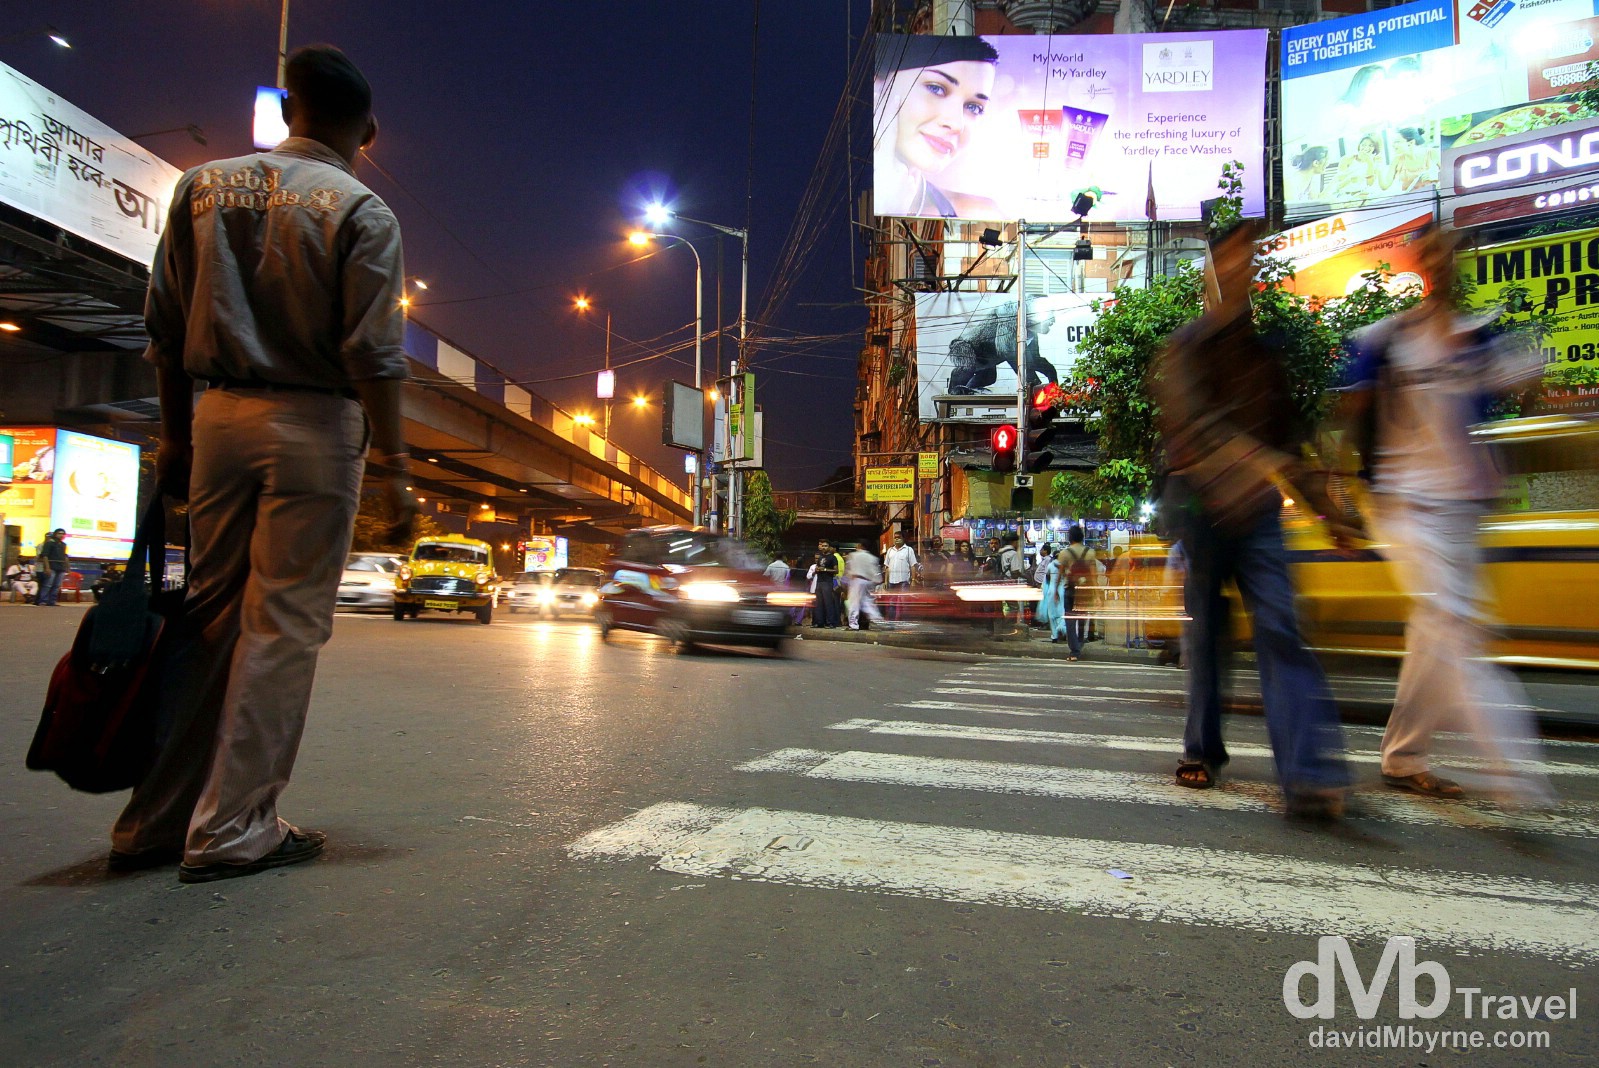 Activity at a junction on Àshutosh Mukherjee Road, Kolkata (Calcutta), West Bengal, India. October 16th 2012.